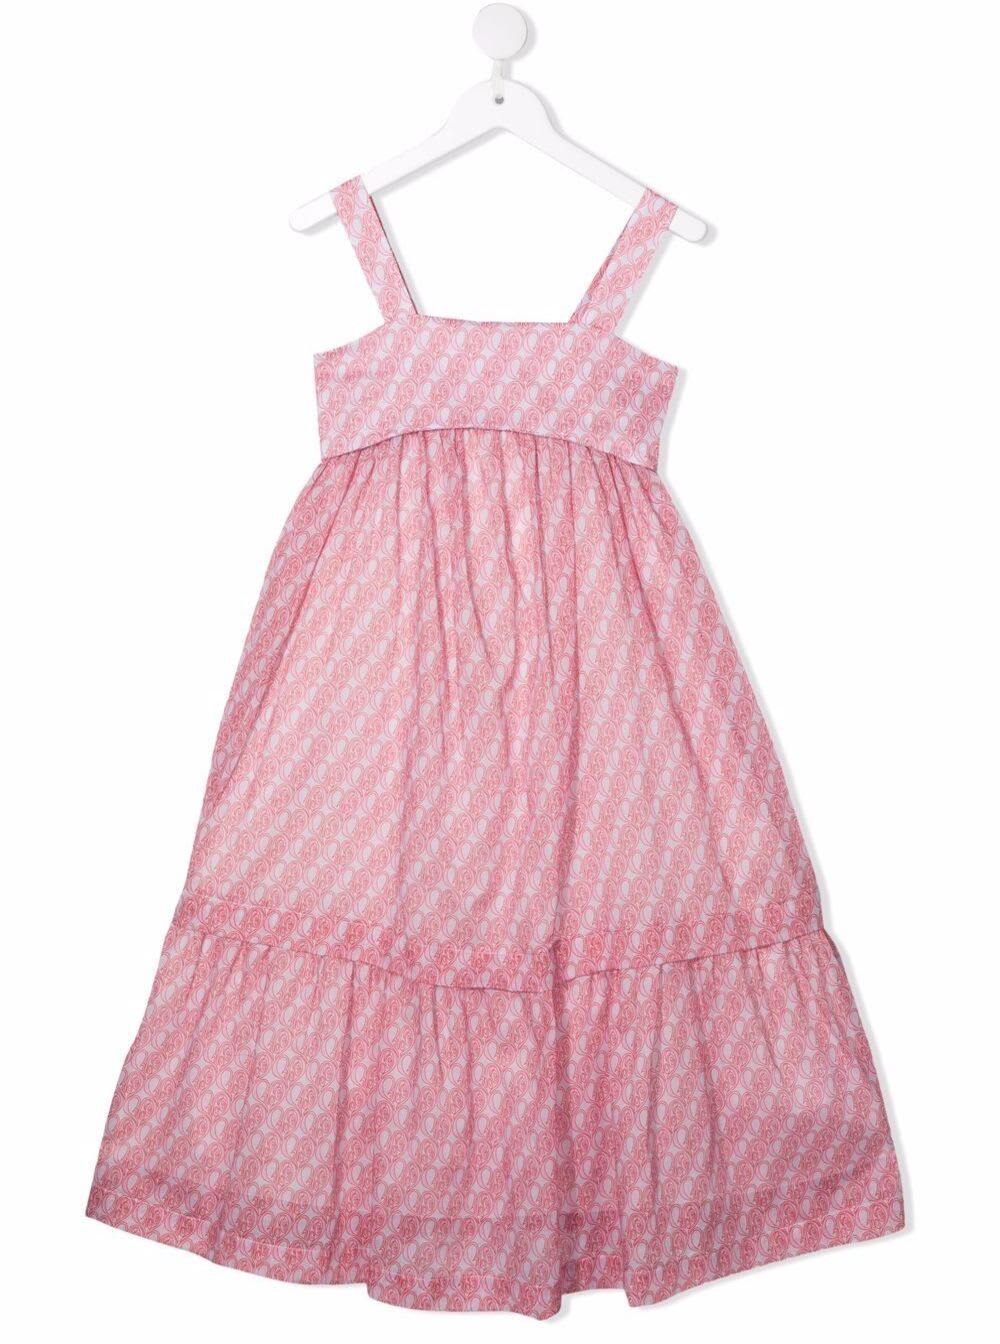 Chloé Kids Girlss Pink Jacquard Cotton Dress With Bow Detail